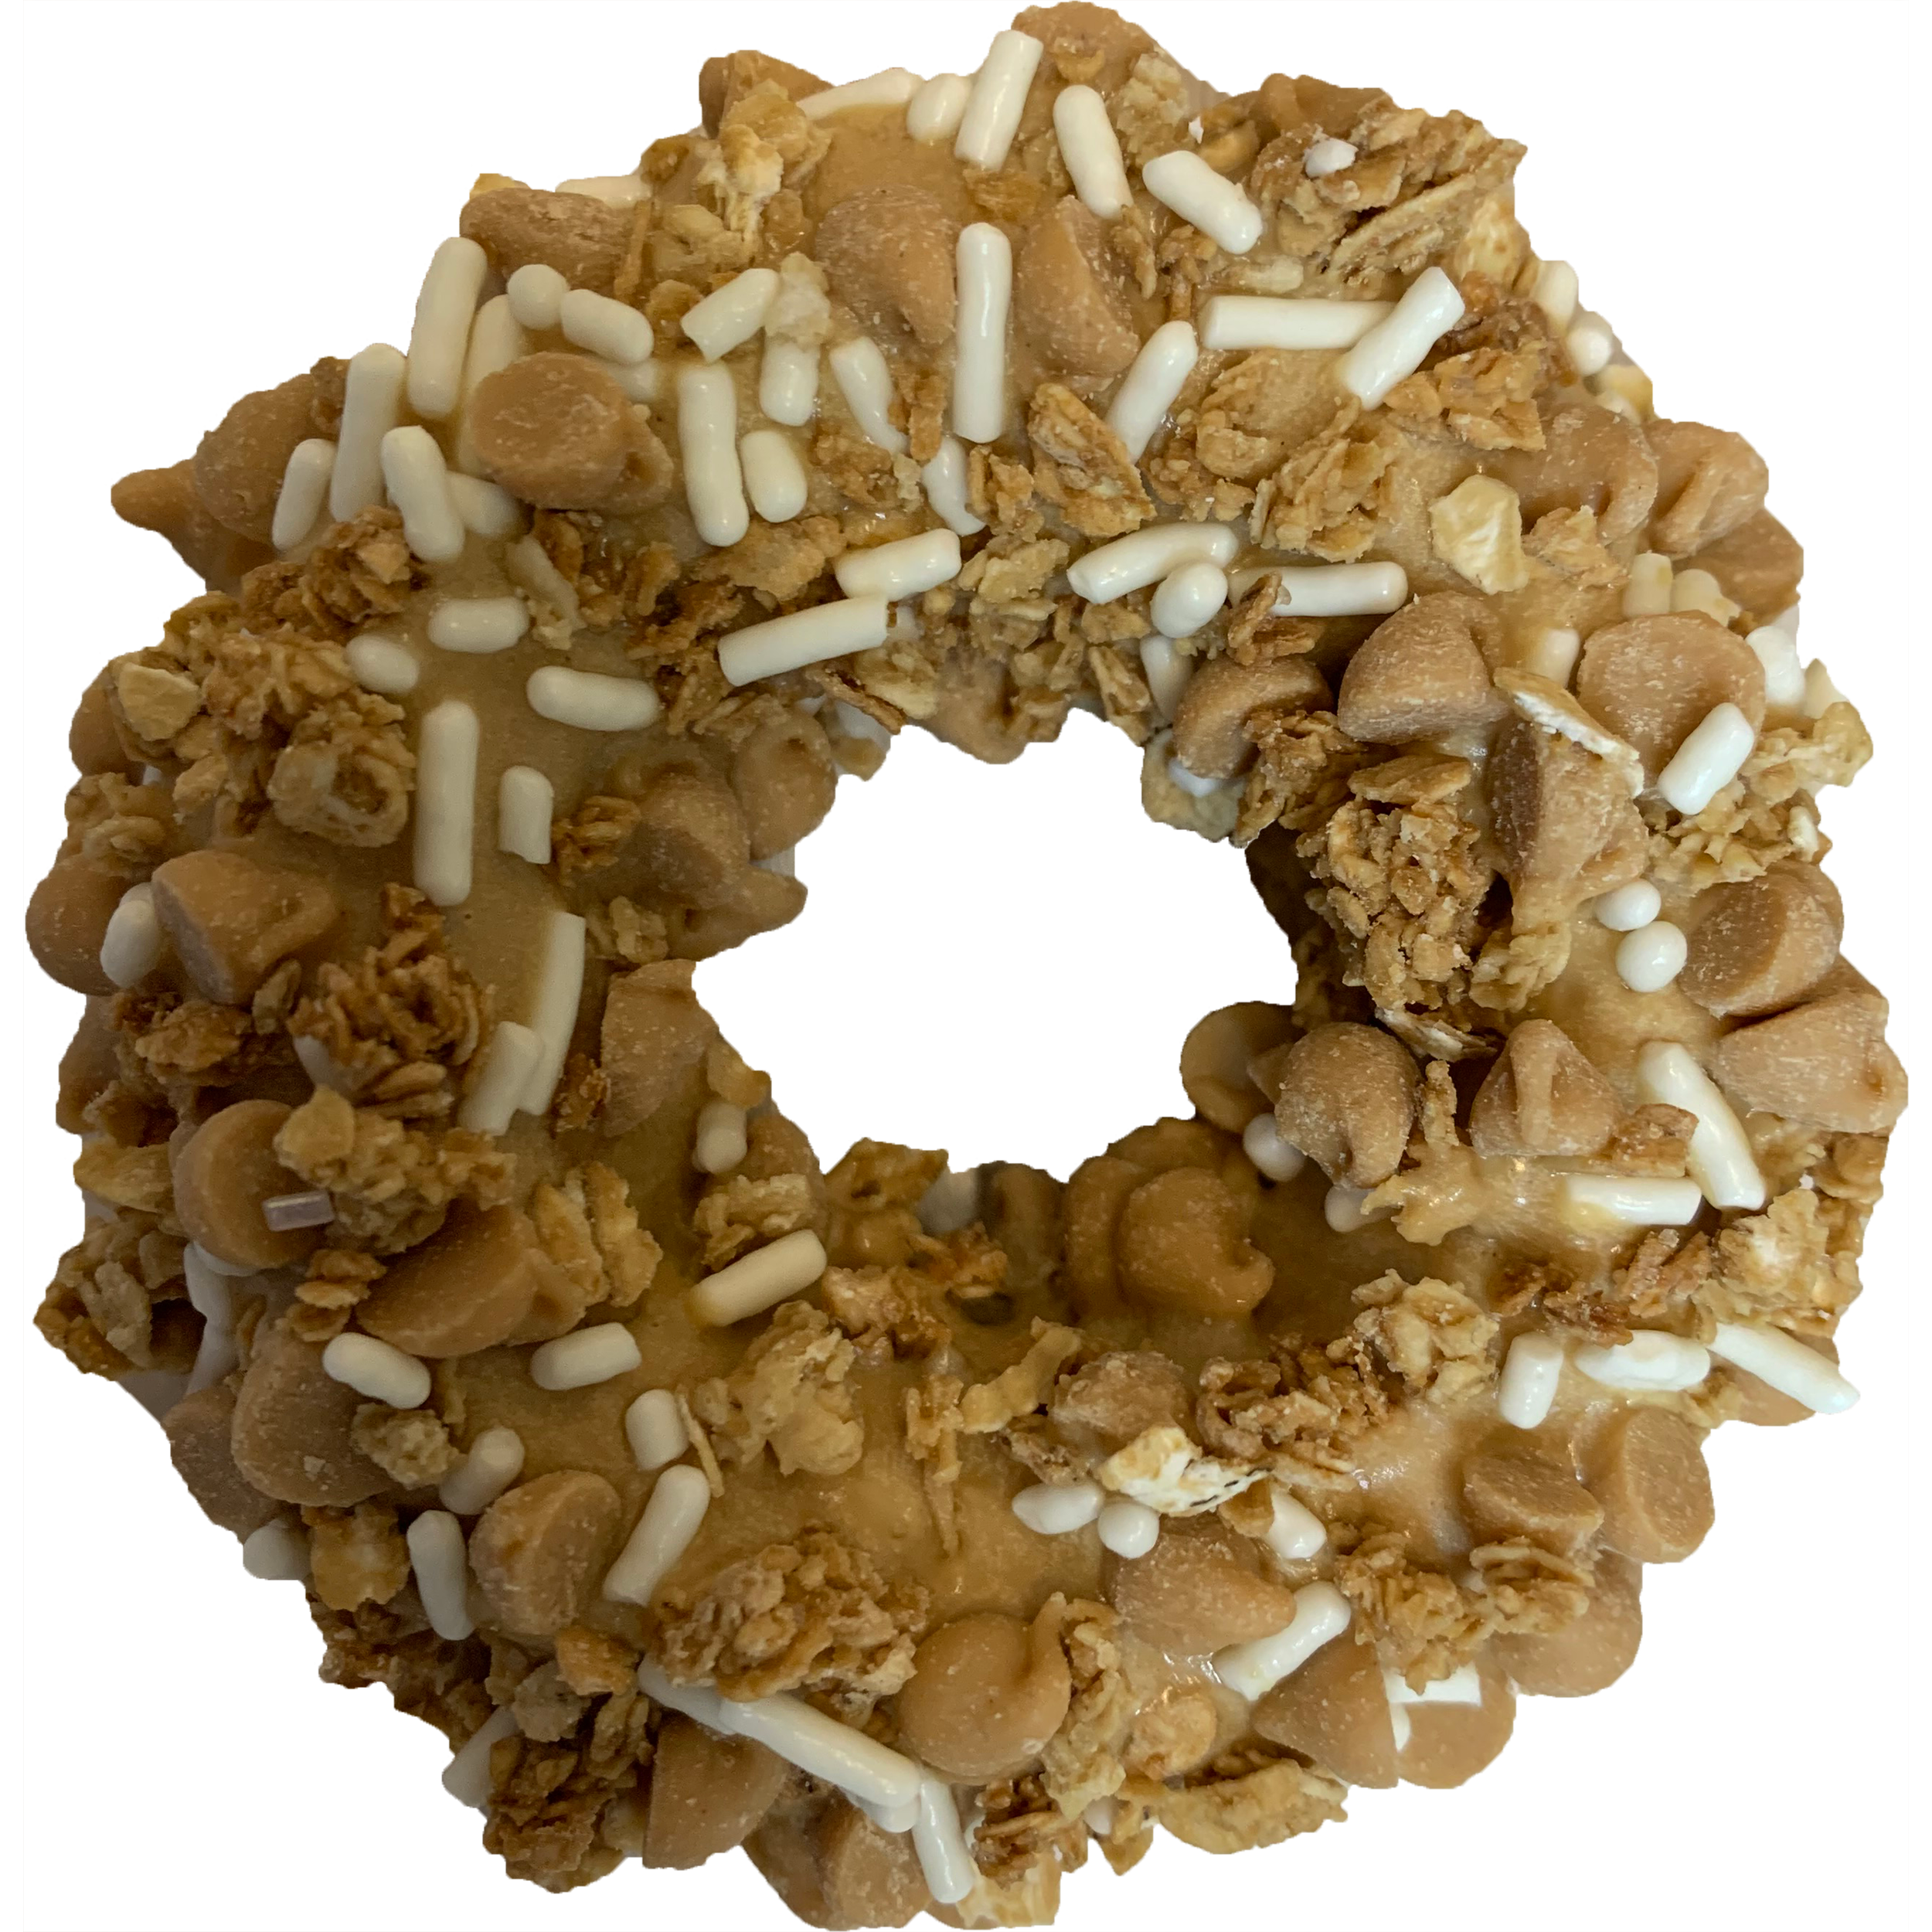 K9 Granola Factory Donut Shop Gourmet Donut For Dogs, Double Peanut Butter Crunch